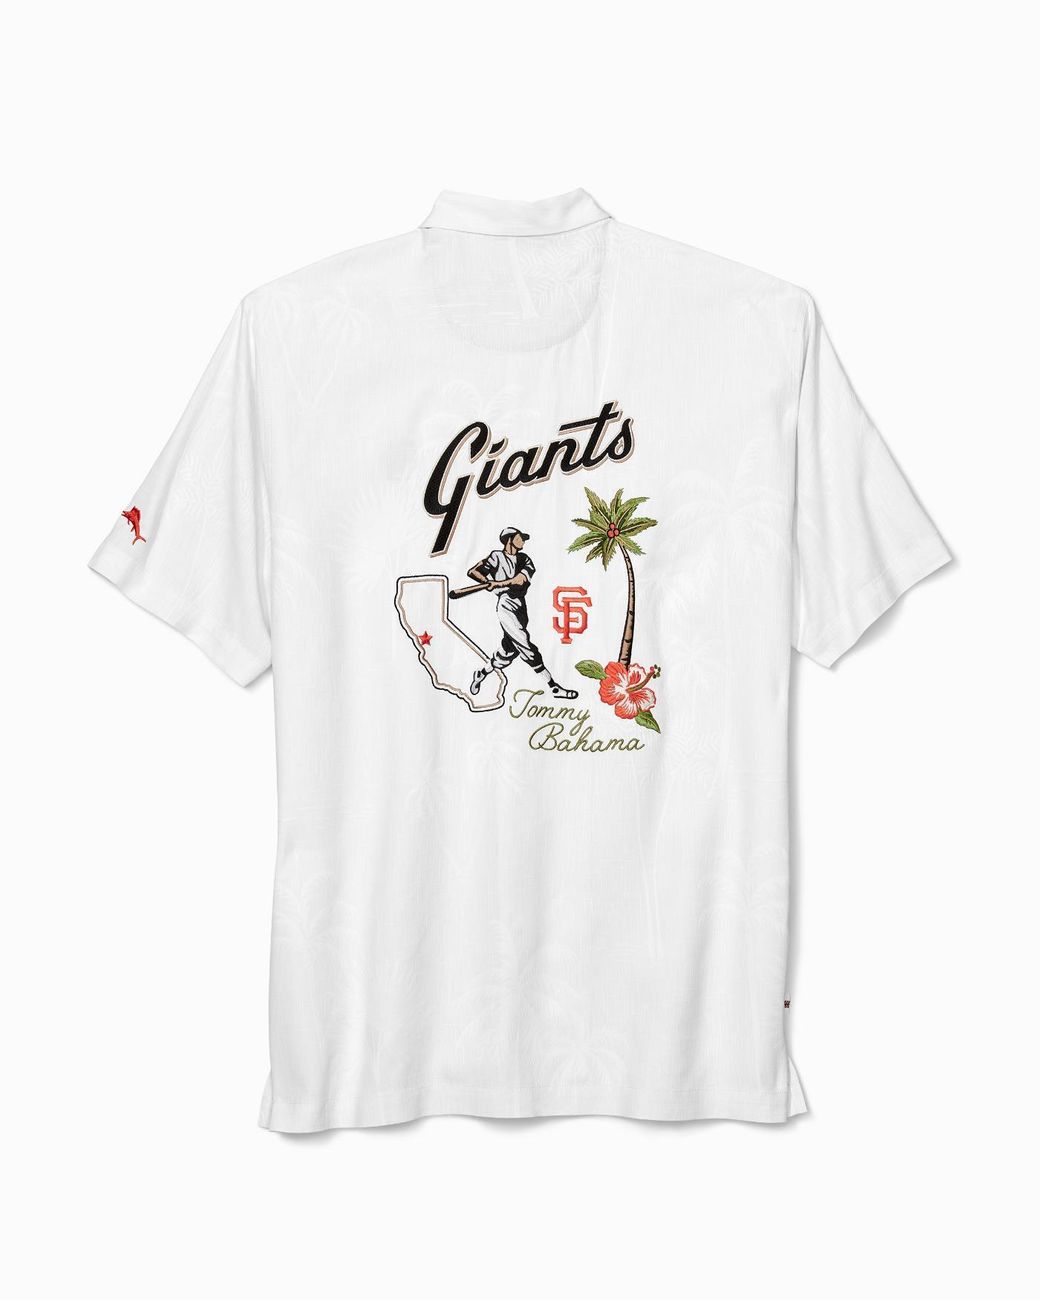 giants sf shirt